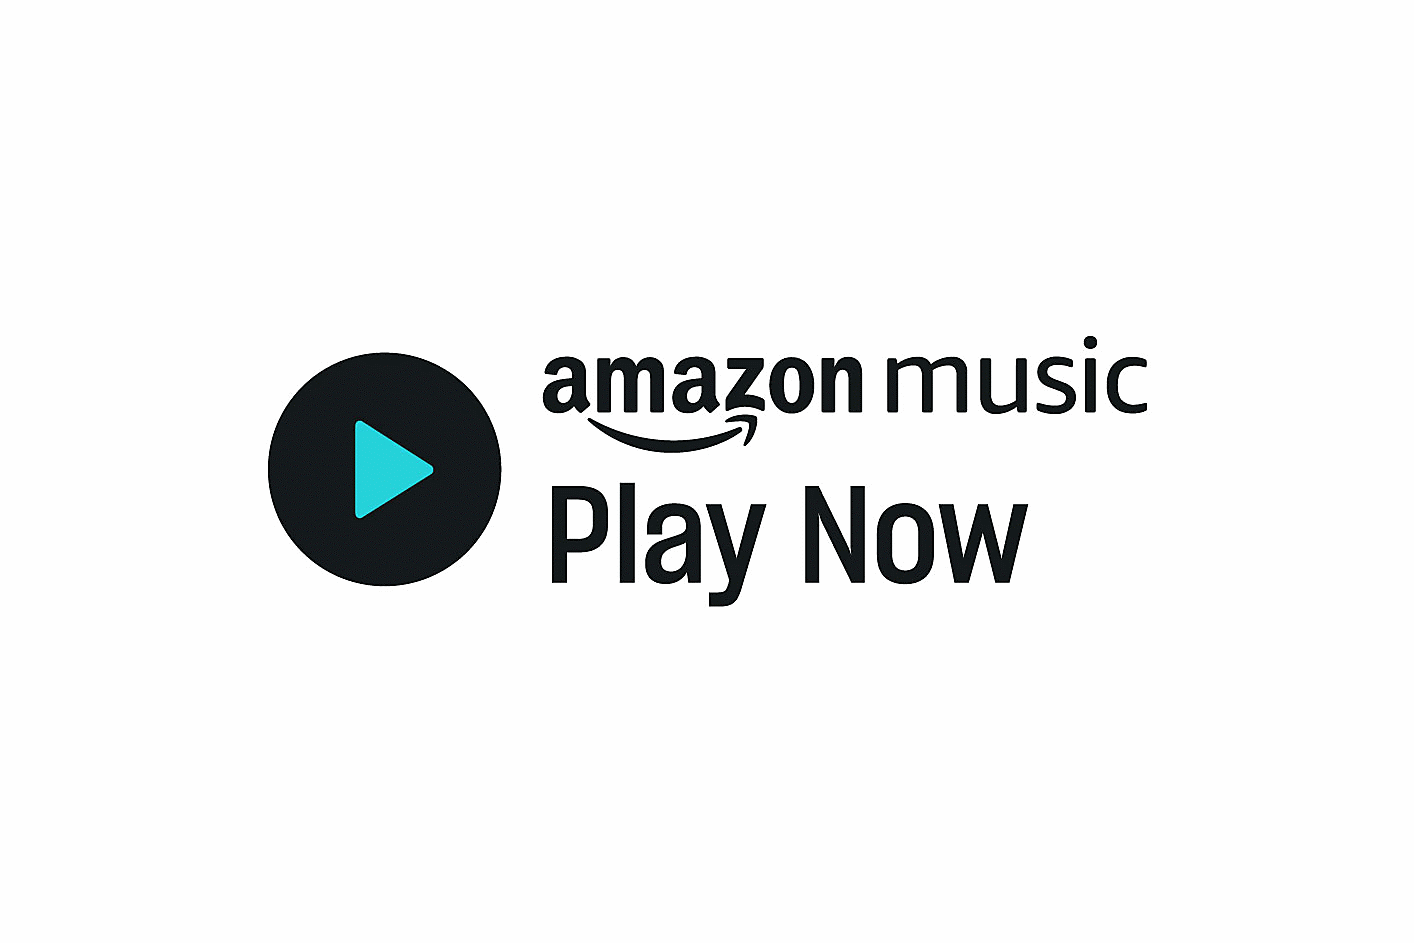 Amazon music Play Now 標誌圖